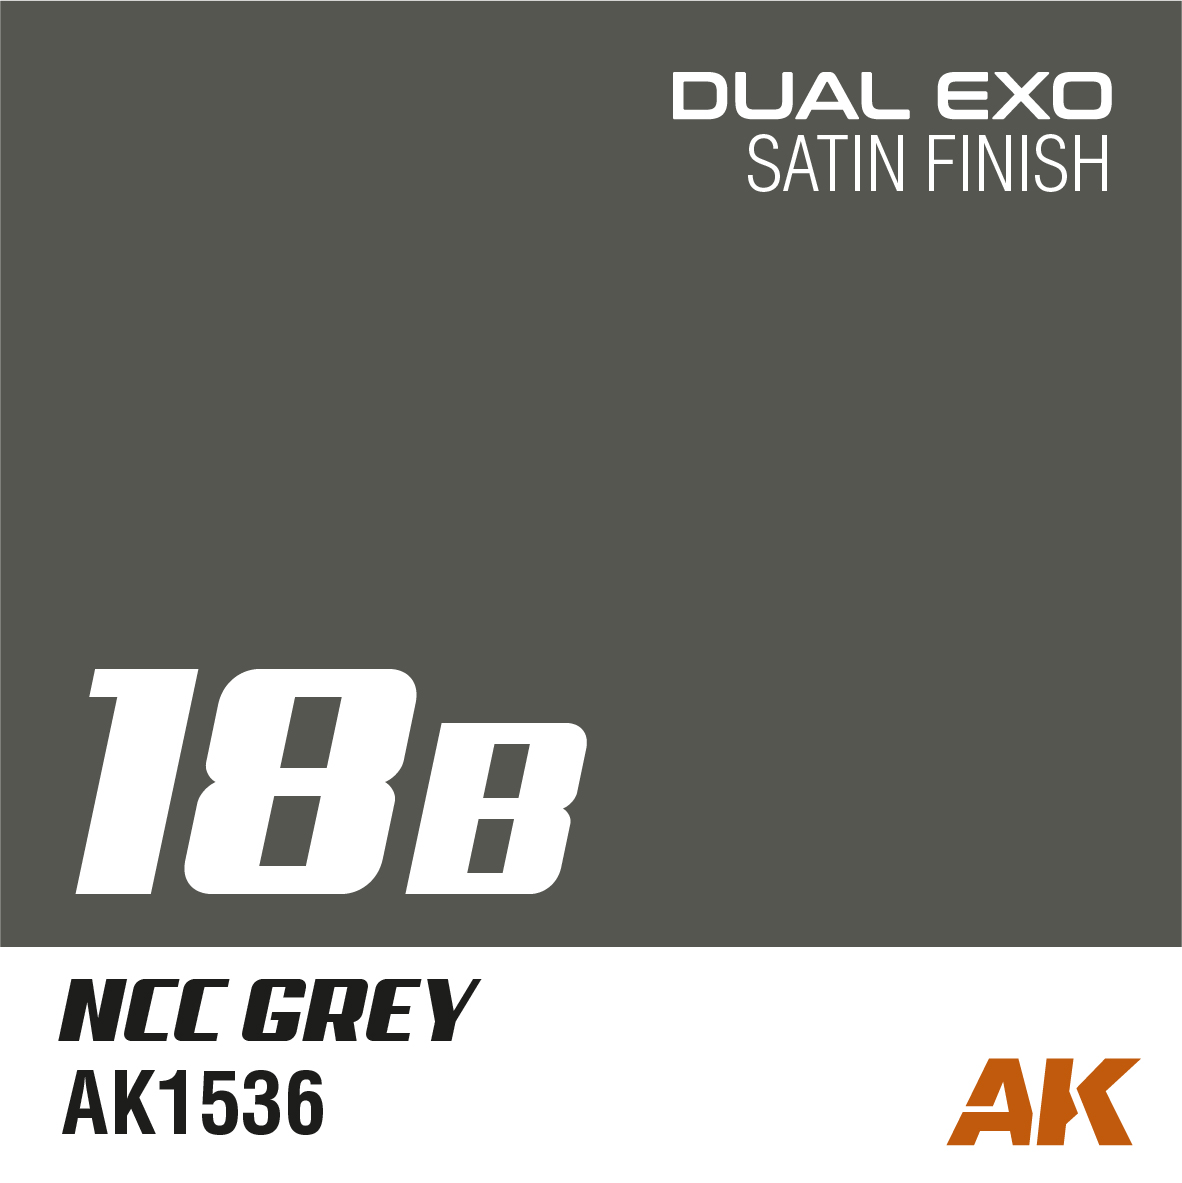 Dual Exo 18B - Ncc Grey